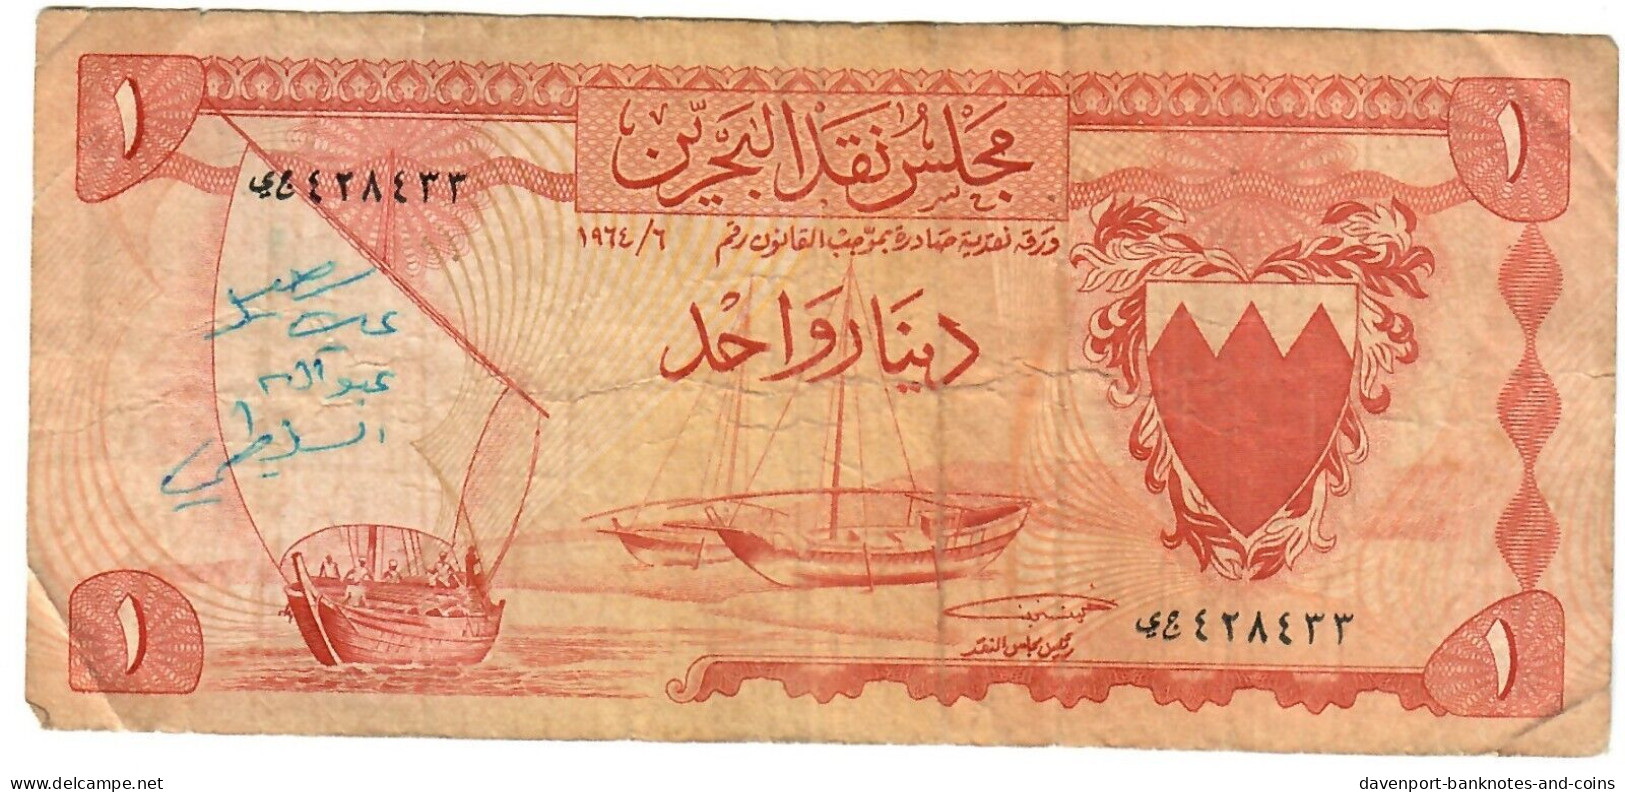 Bahrain 1 Dinar 1965 VG - Bahrein